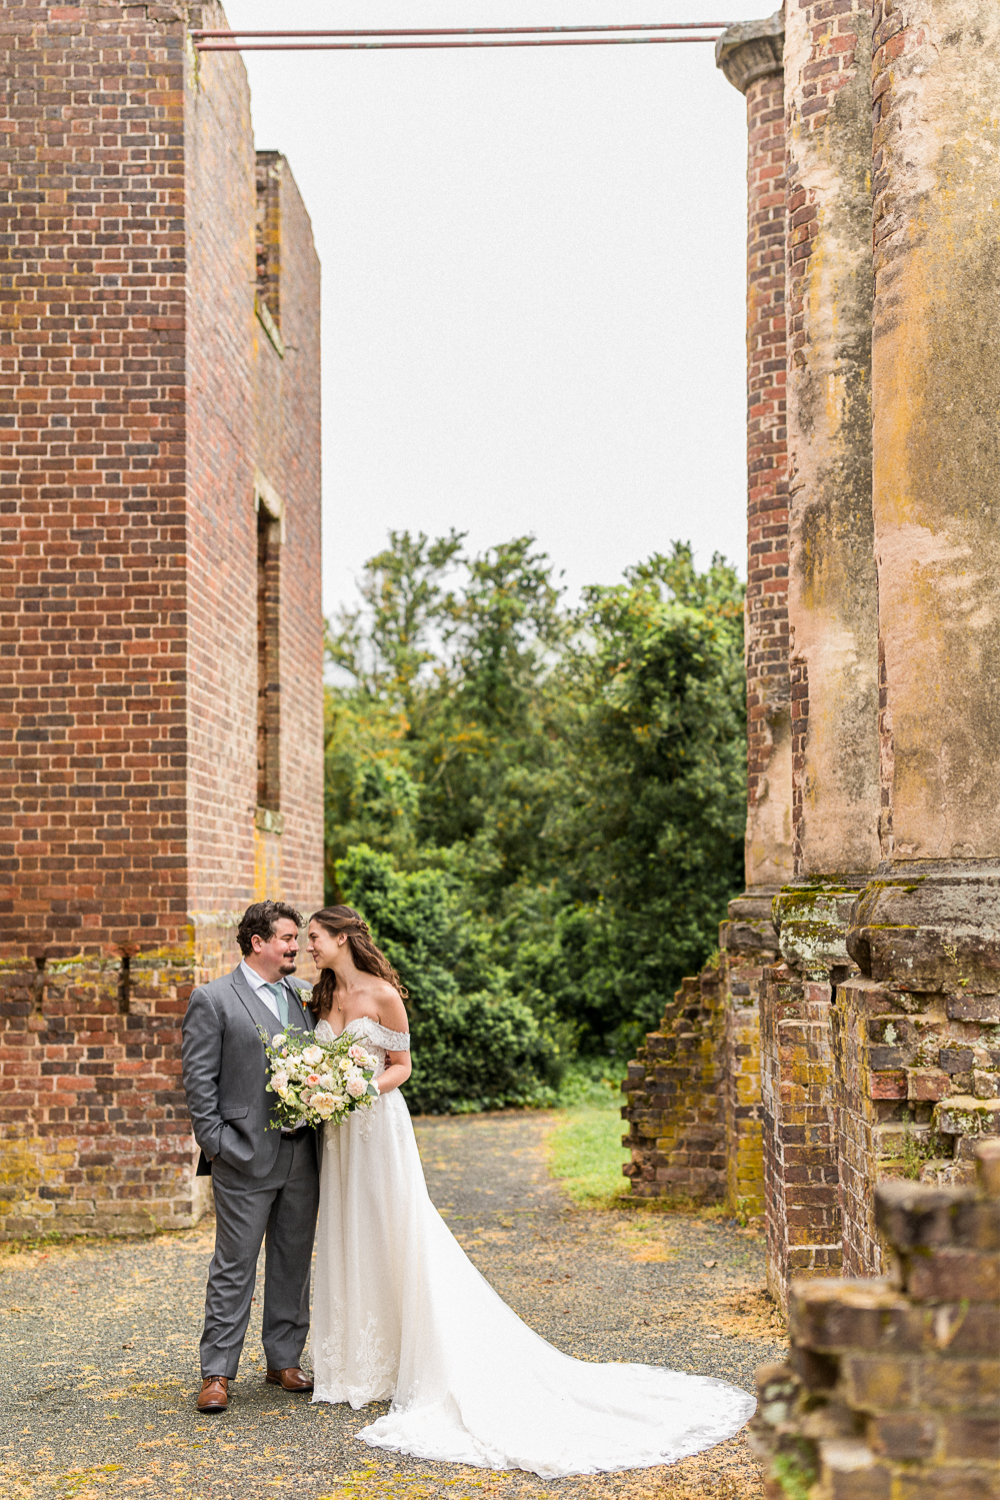 Stunning, Rainy Day Wedding at Barboursville Vineyards Ruins - Hunter and Sarah Photography